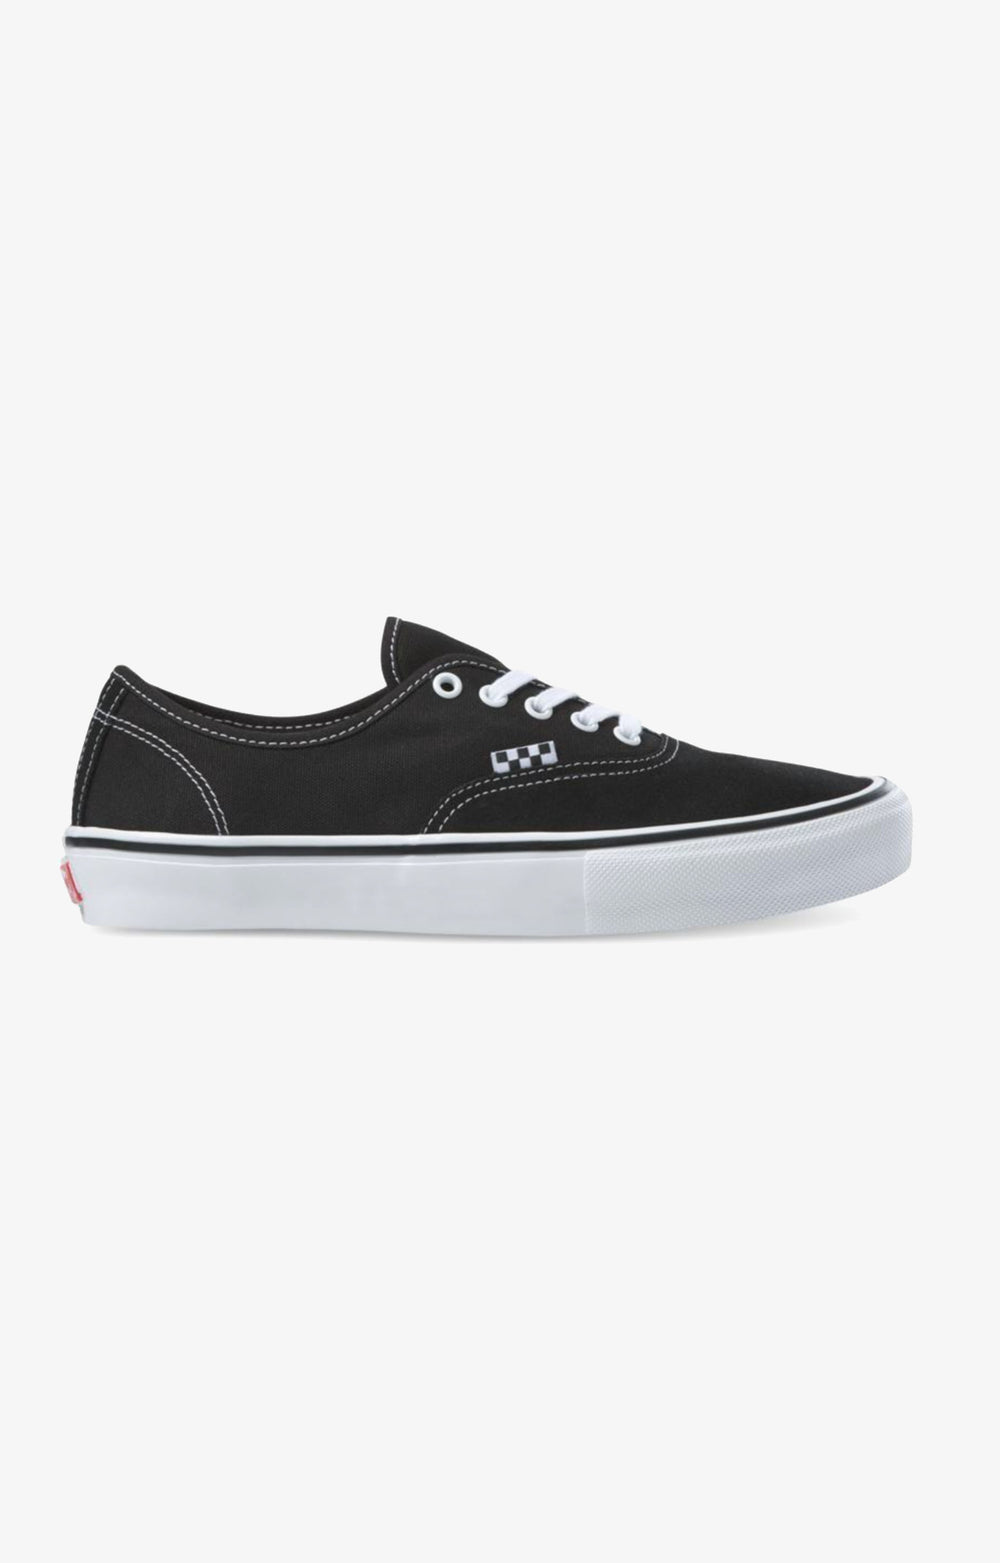 Vans Skate Authentic Shoe, Black/White